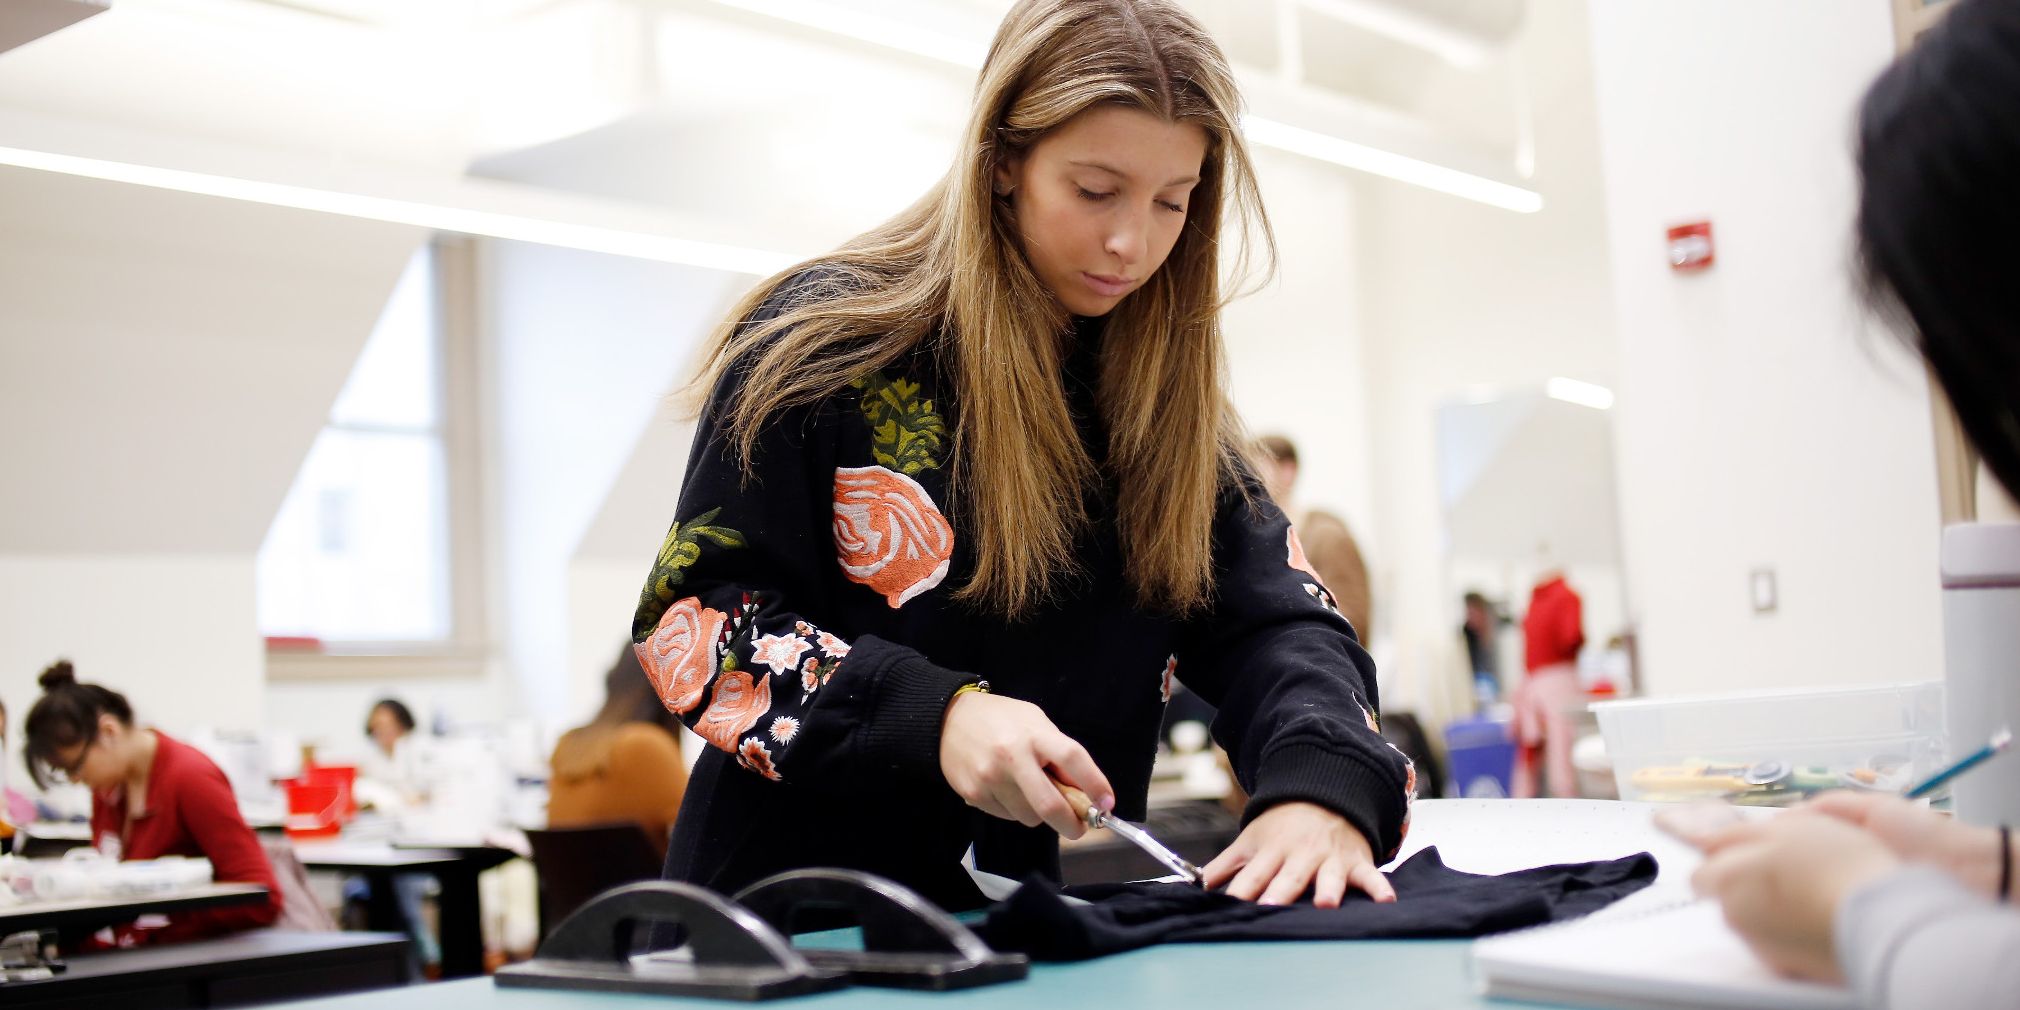 A fashion design student cuts fabric in class